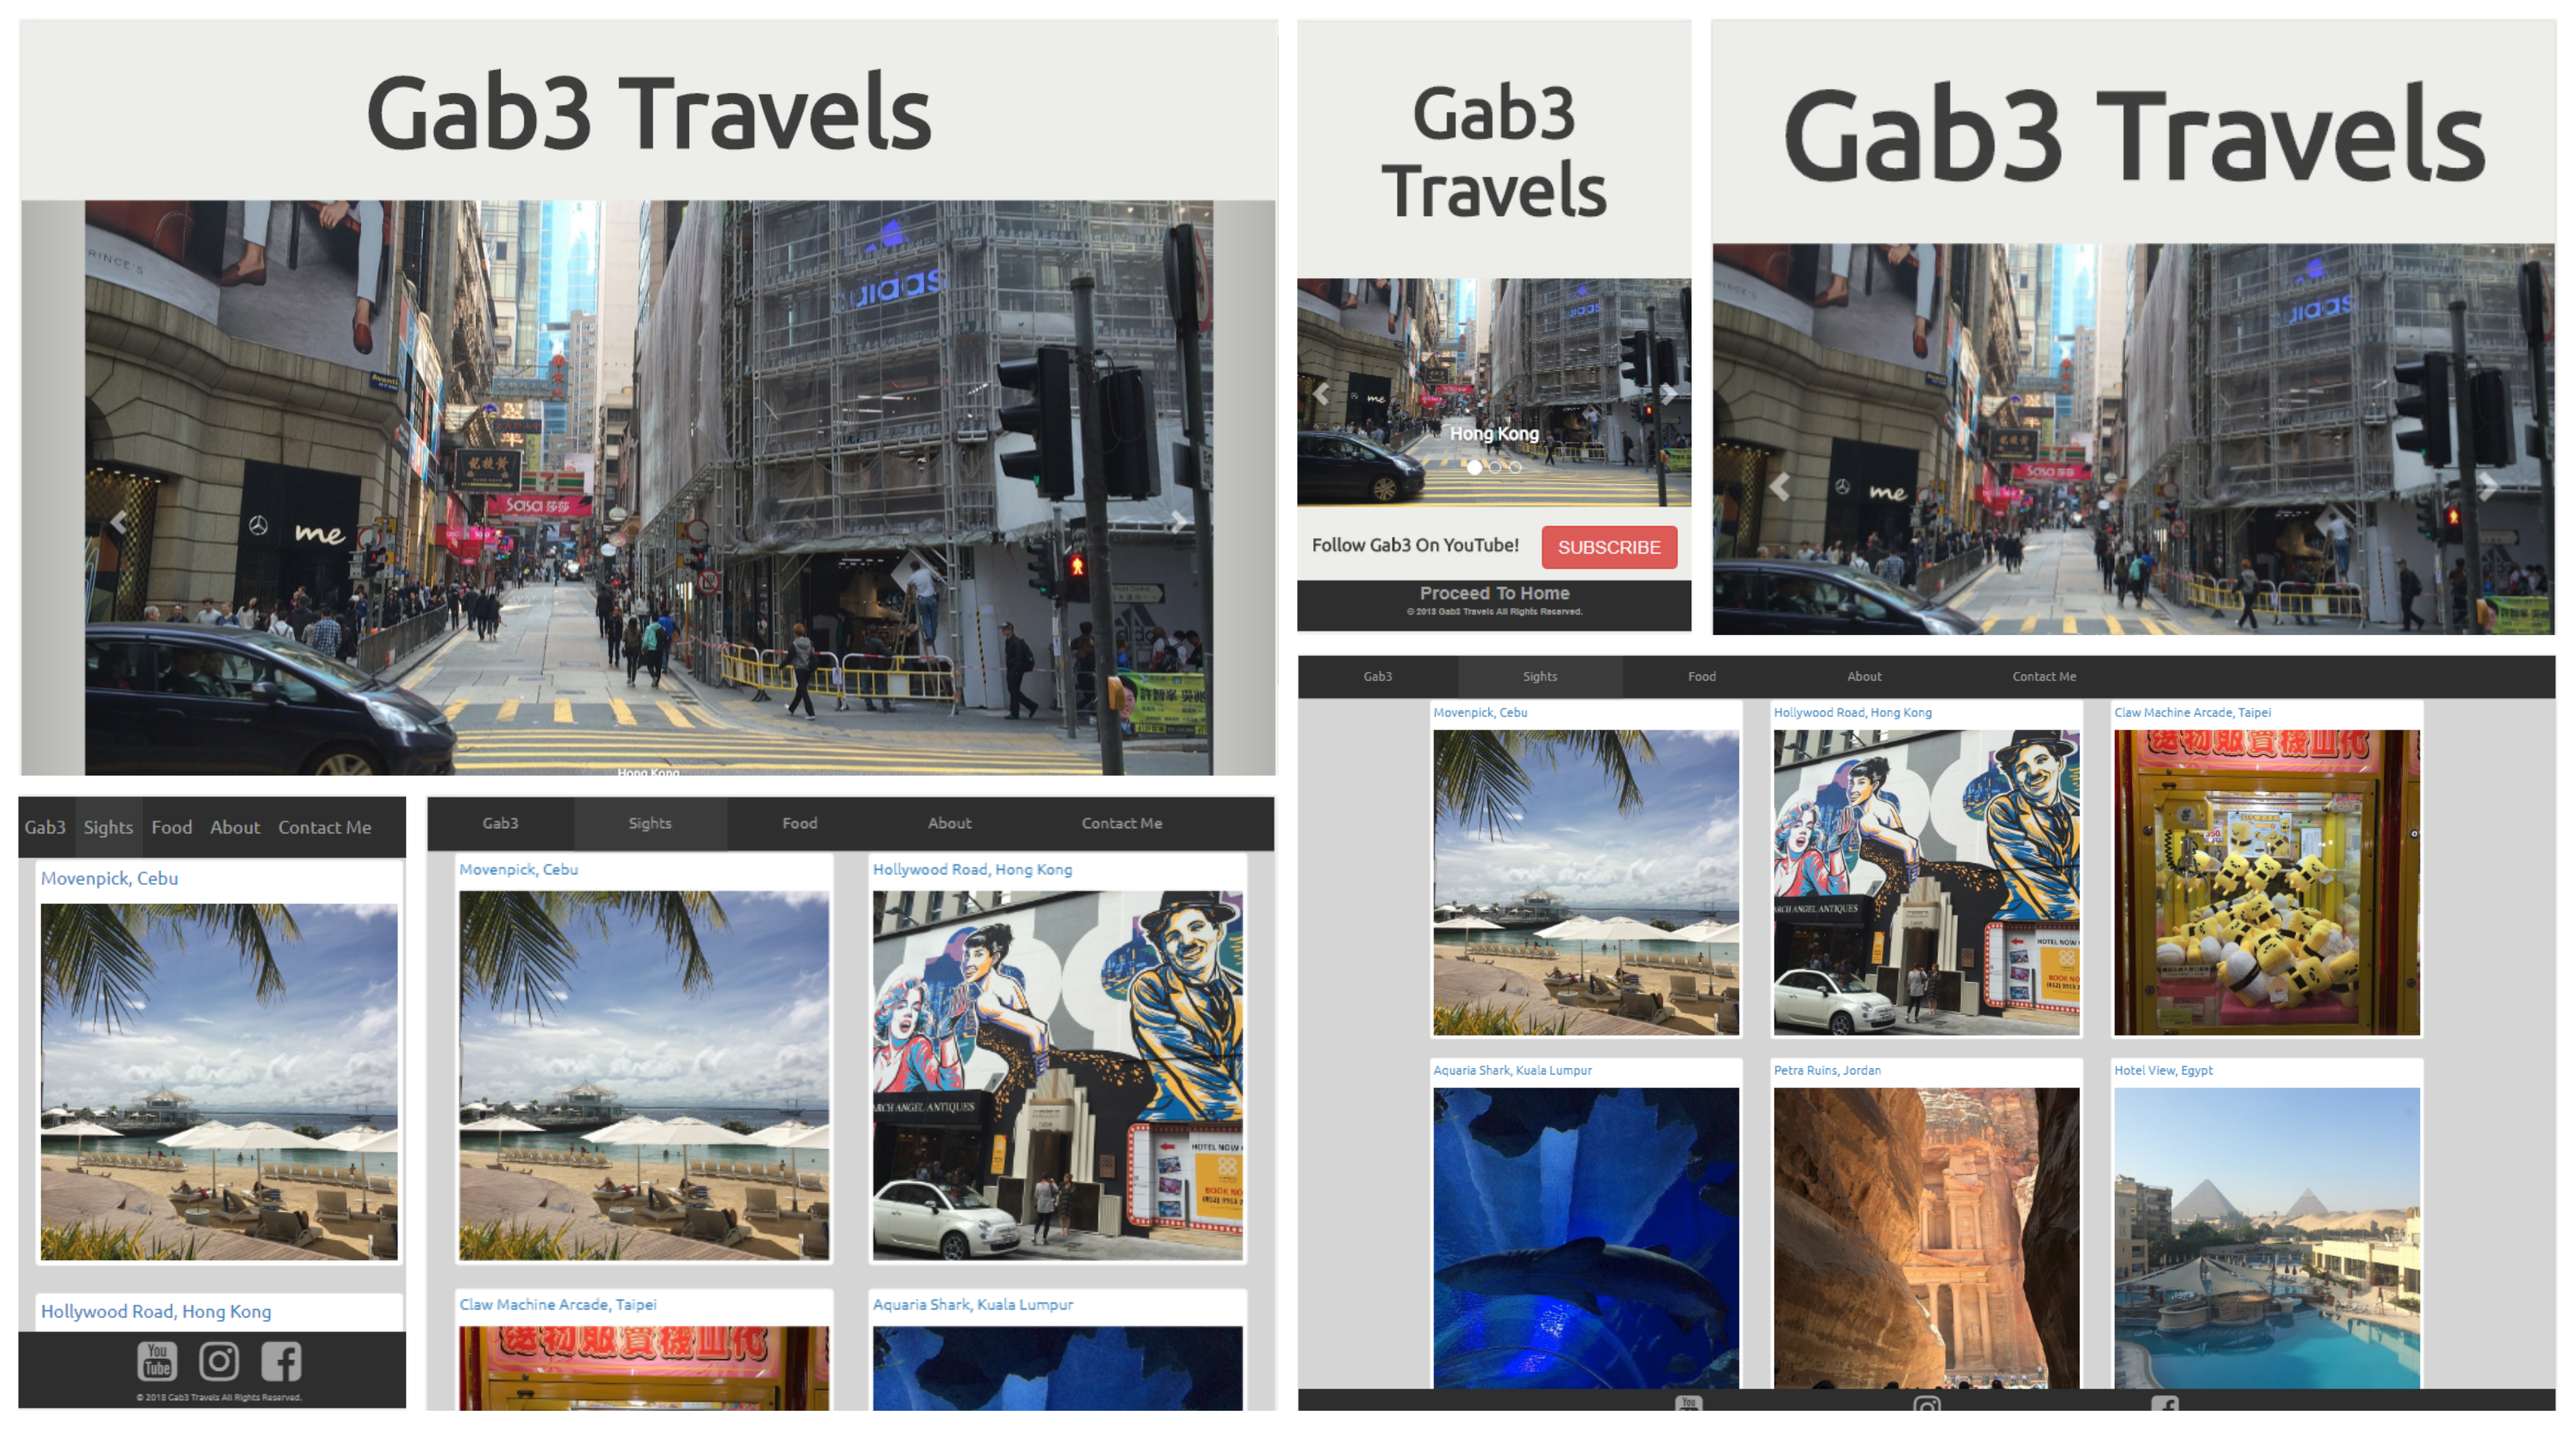 Gab3 Travels, created by Gabe